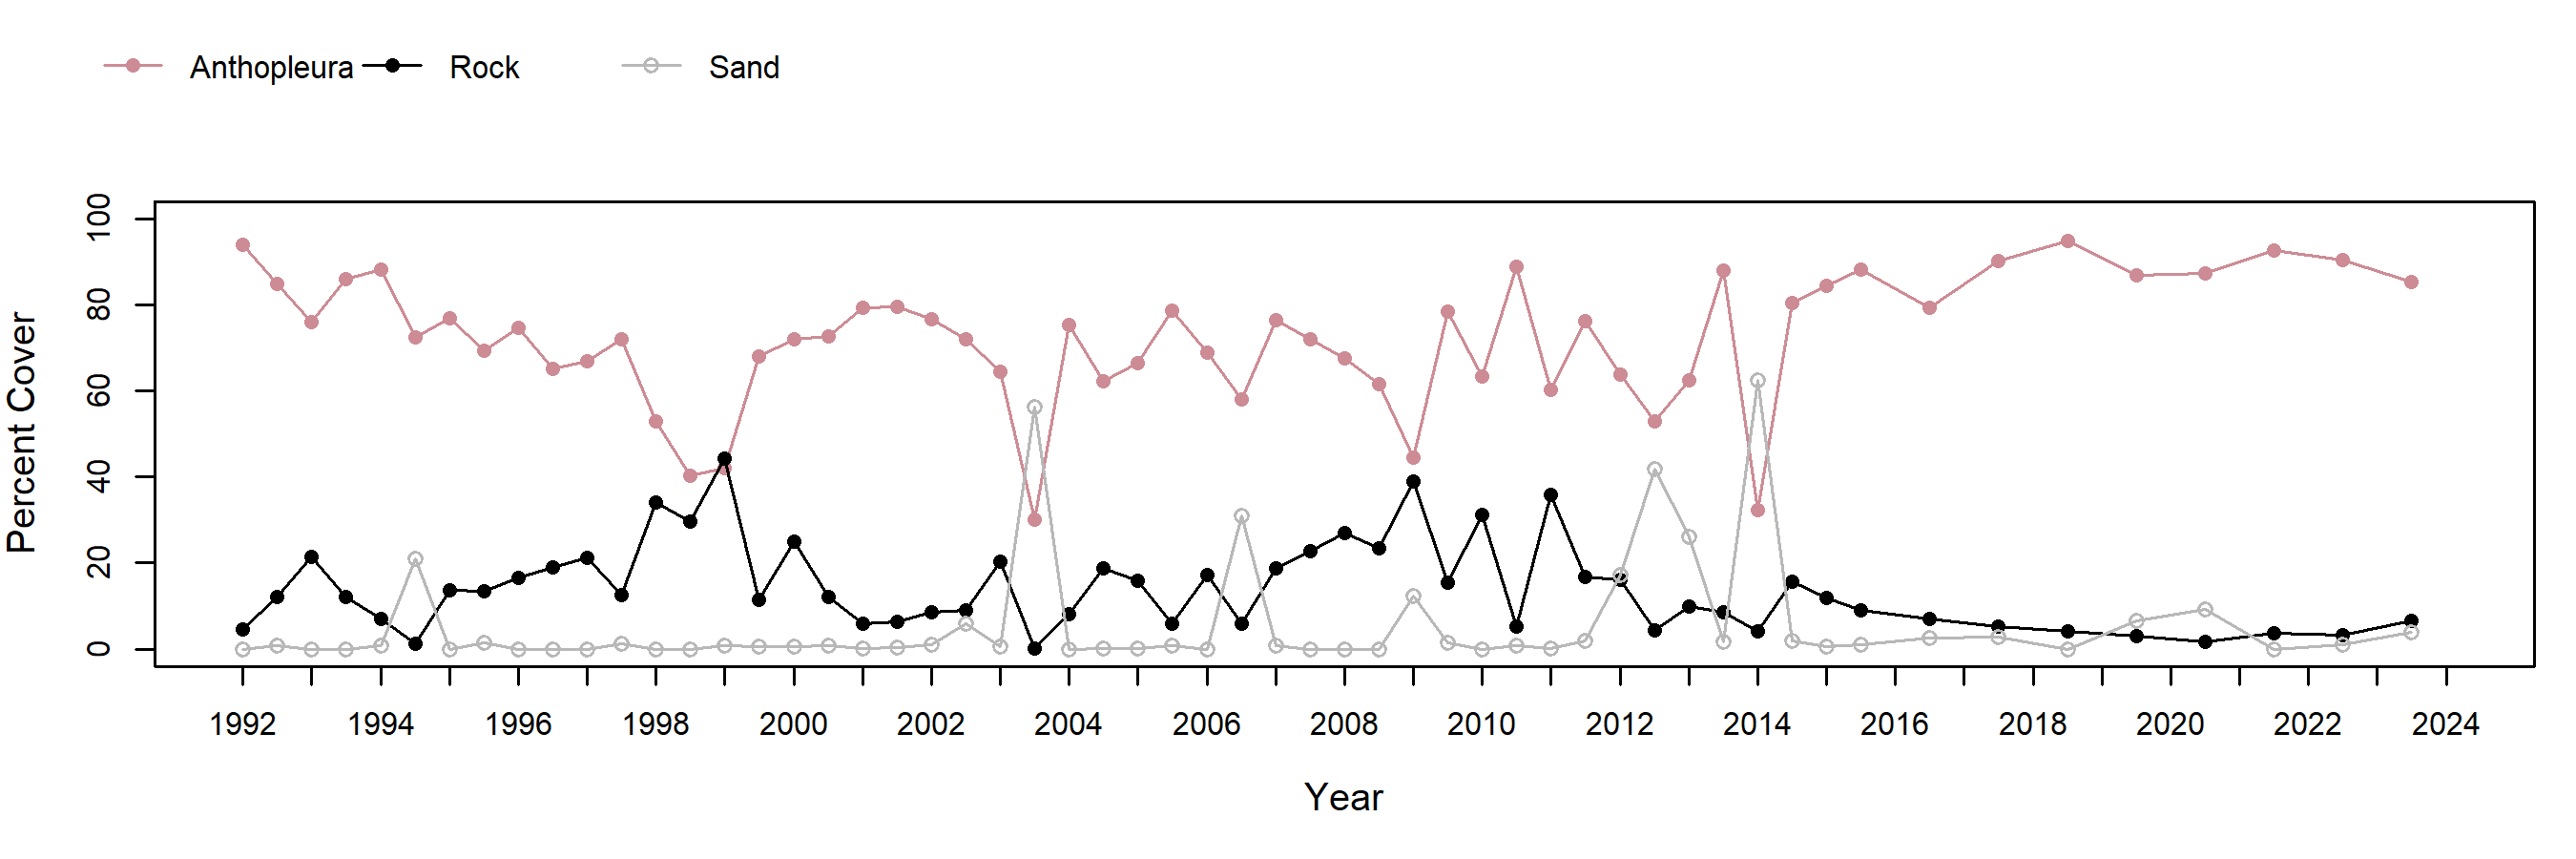 Alegria Anthopleura trend plot